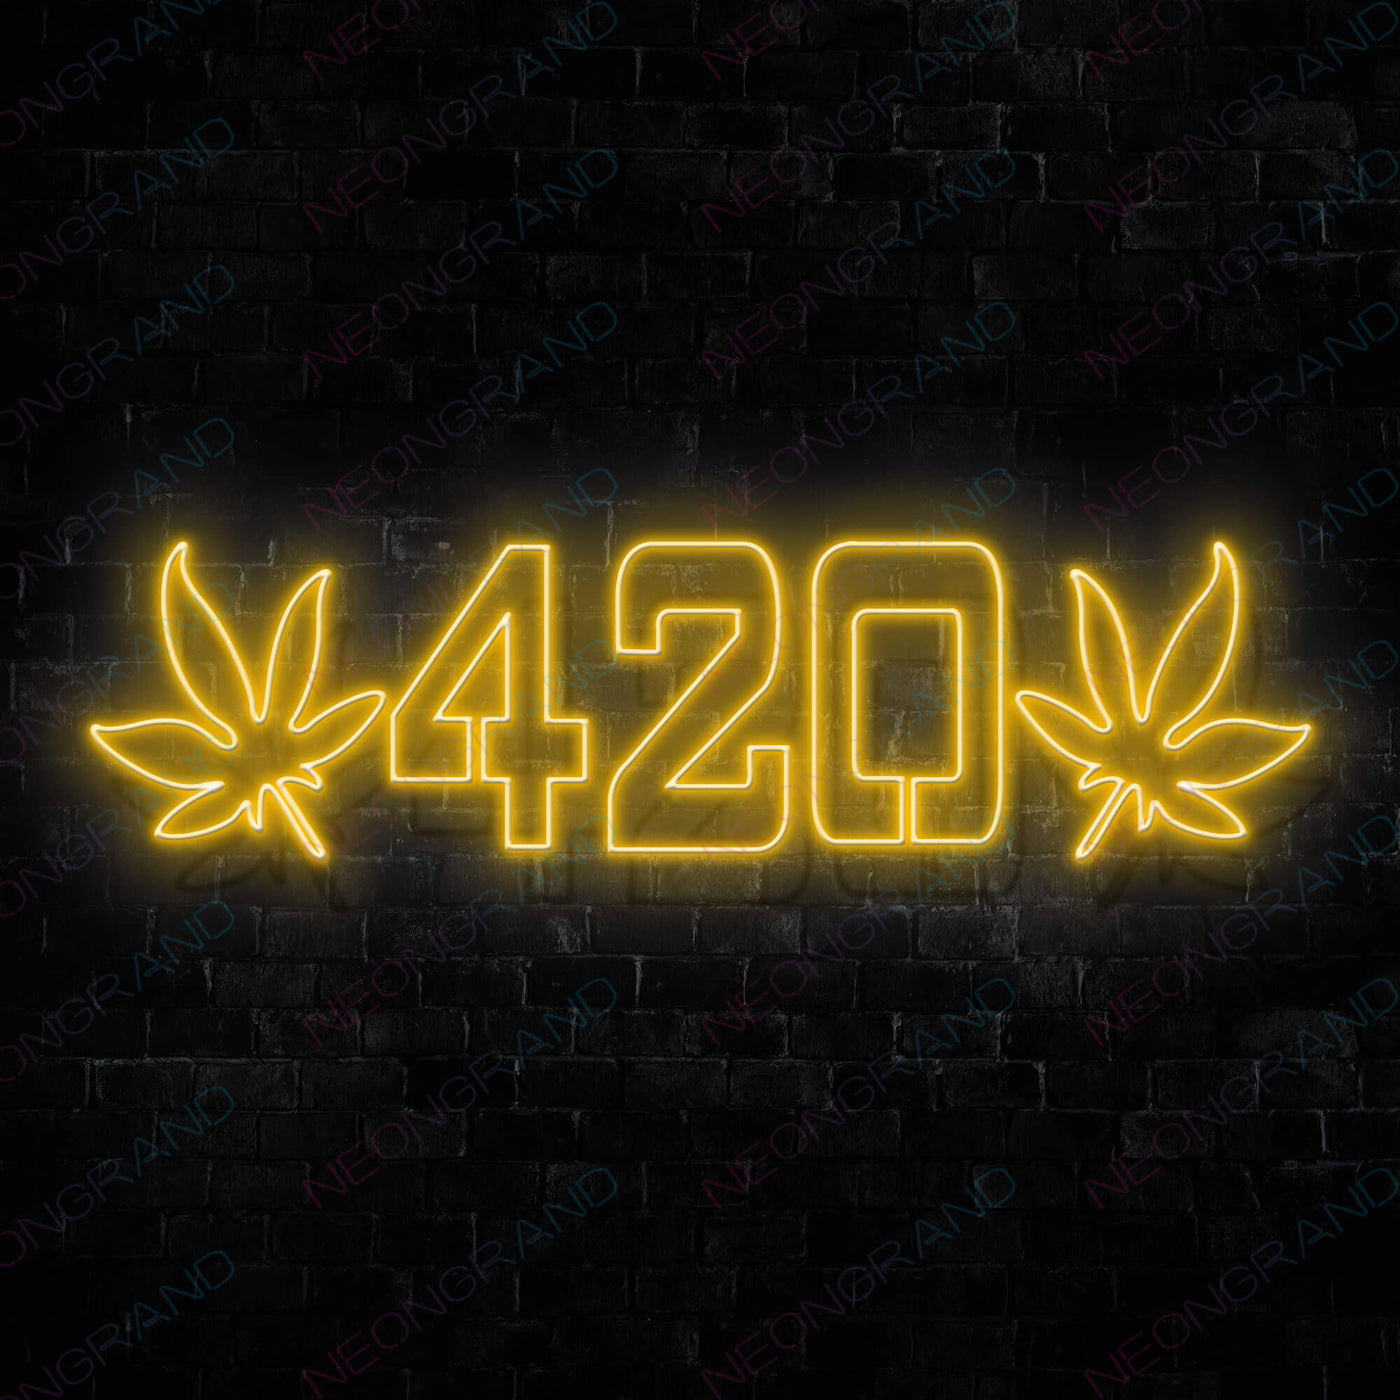 Cannabis 420 Weed Neon Sign Led Light orange yellow